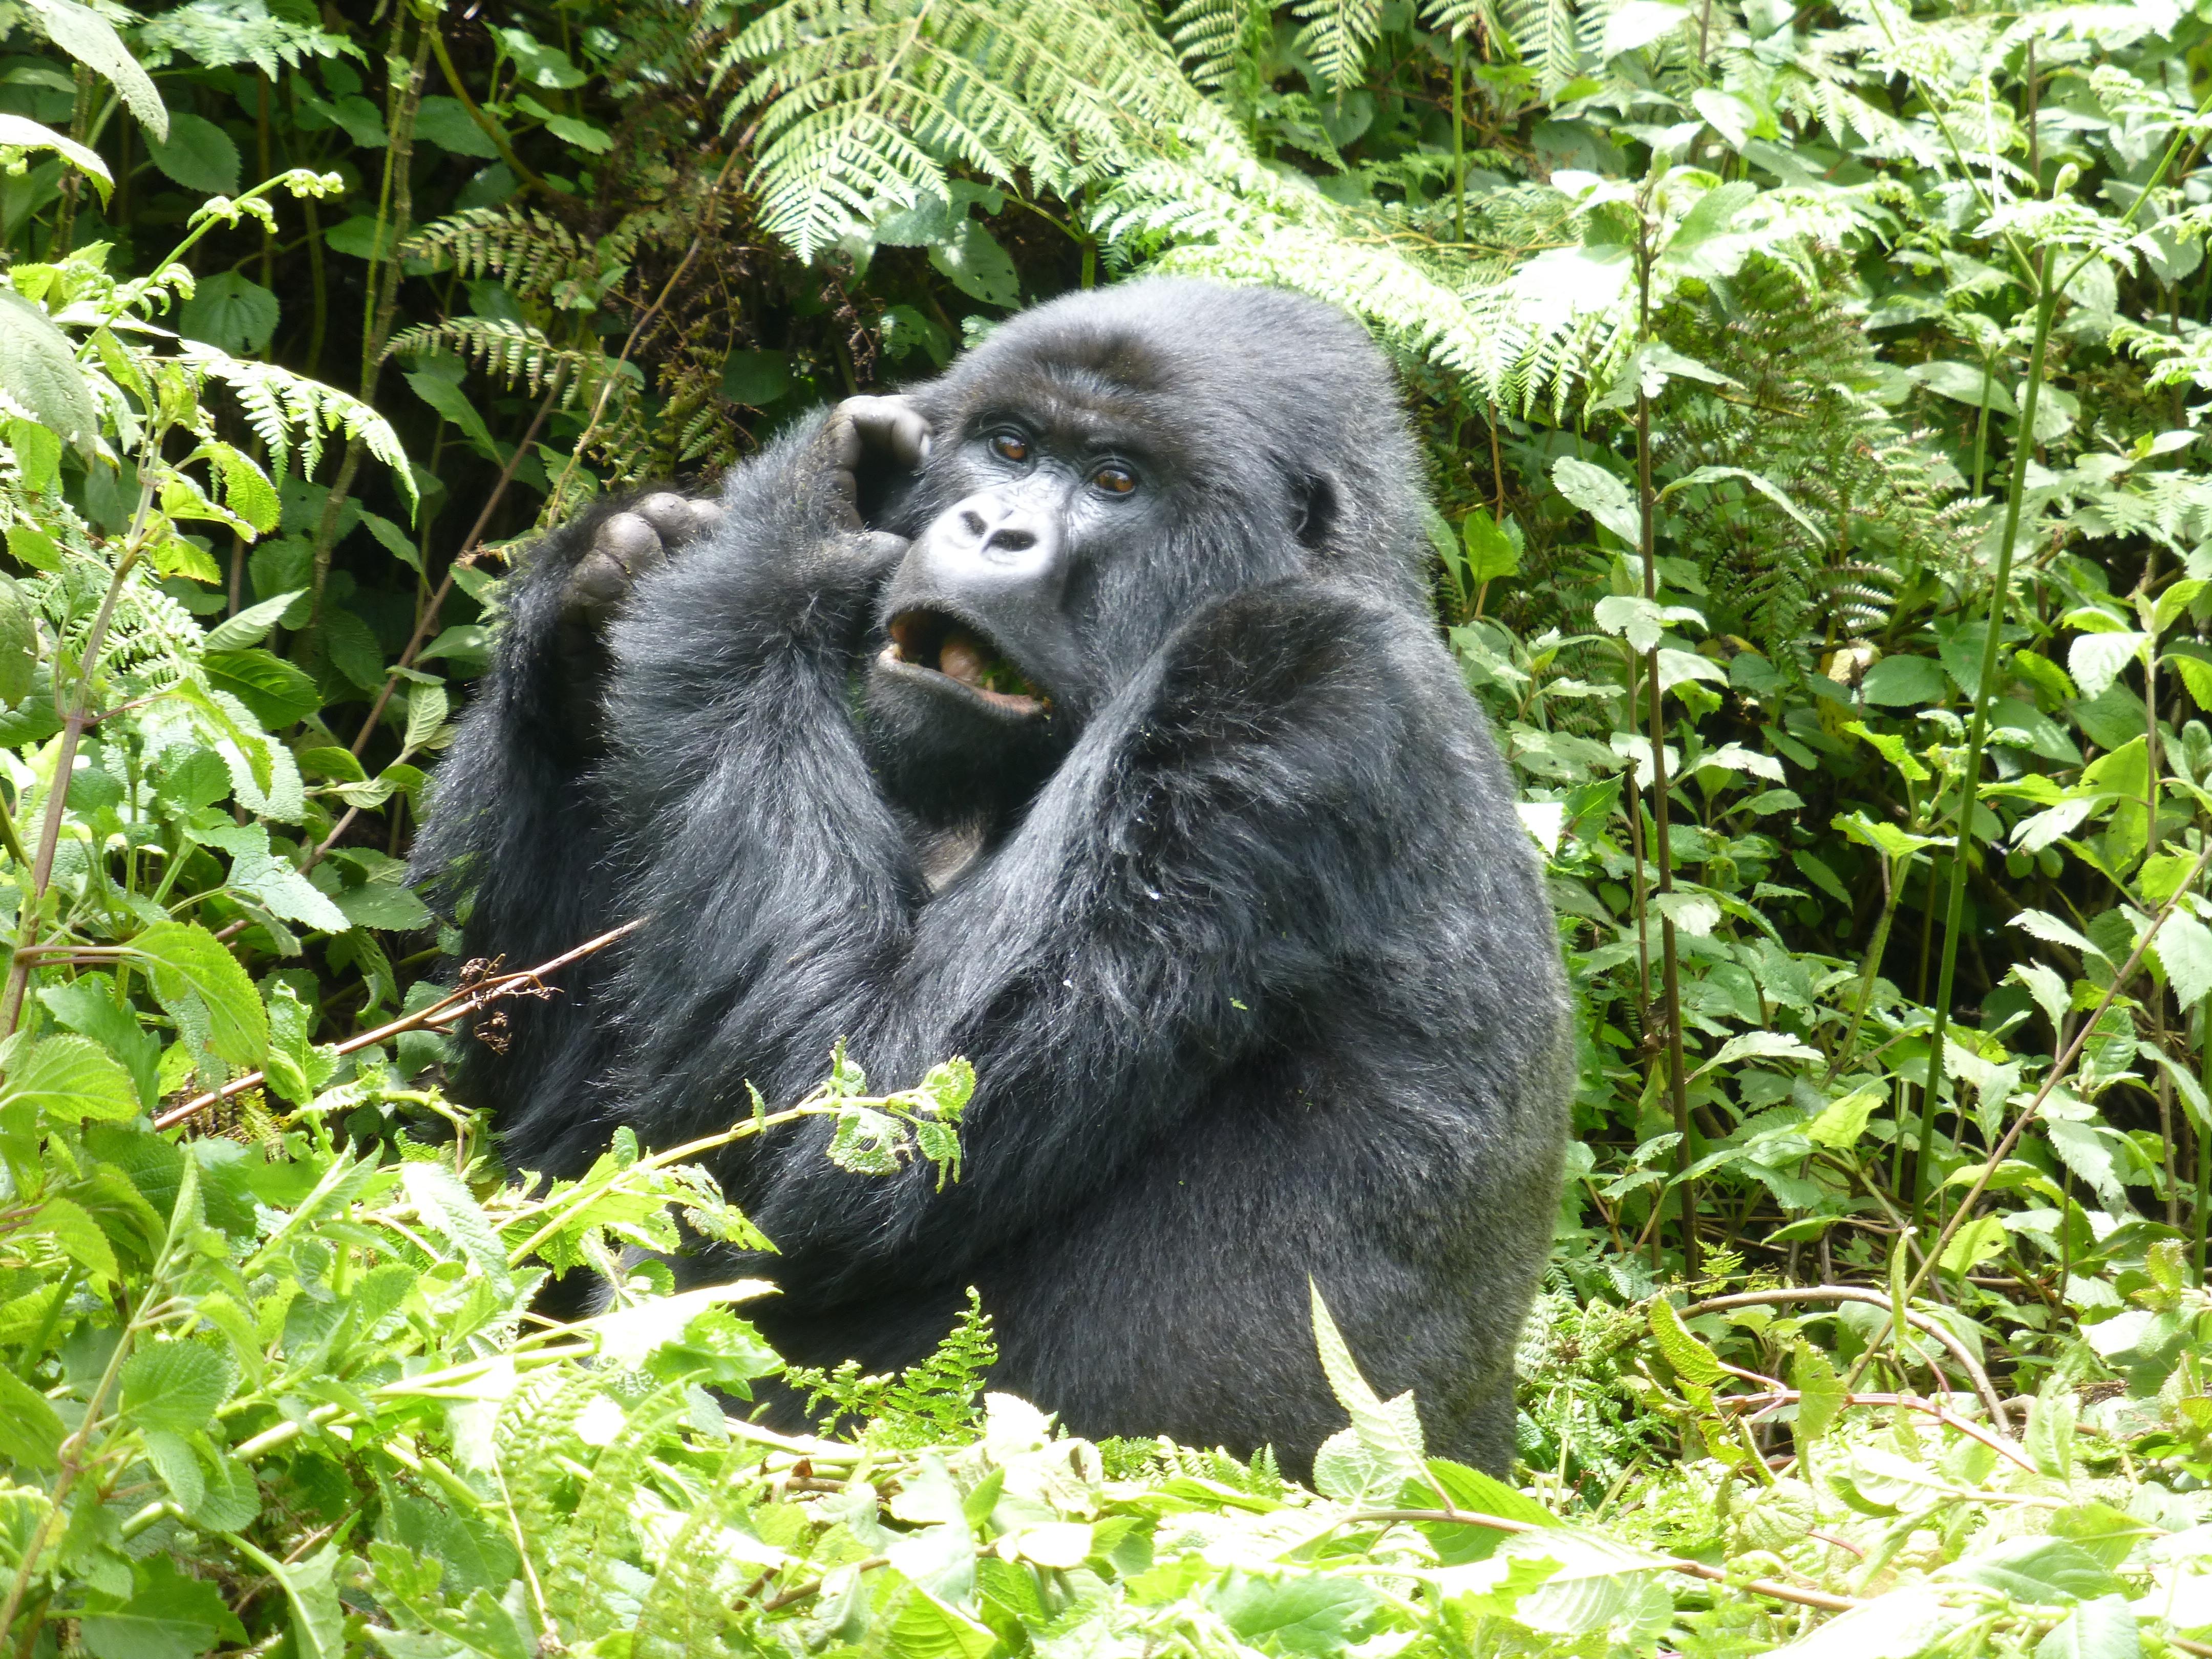 6 Day Uganda Gorillas and wildlife safari through Queen Elizabeth national park and Bwindi Impenetrable national park